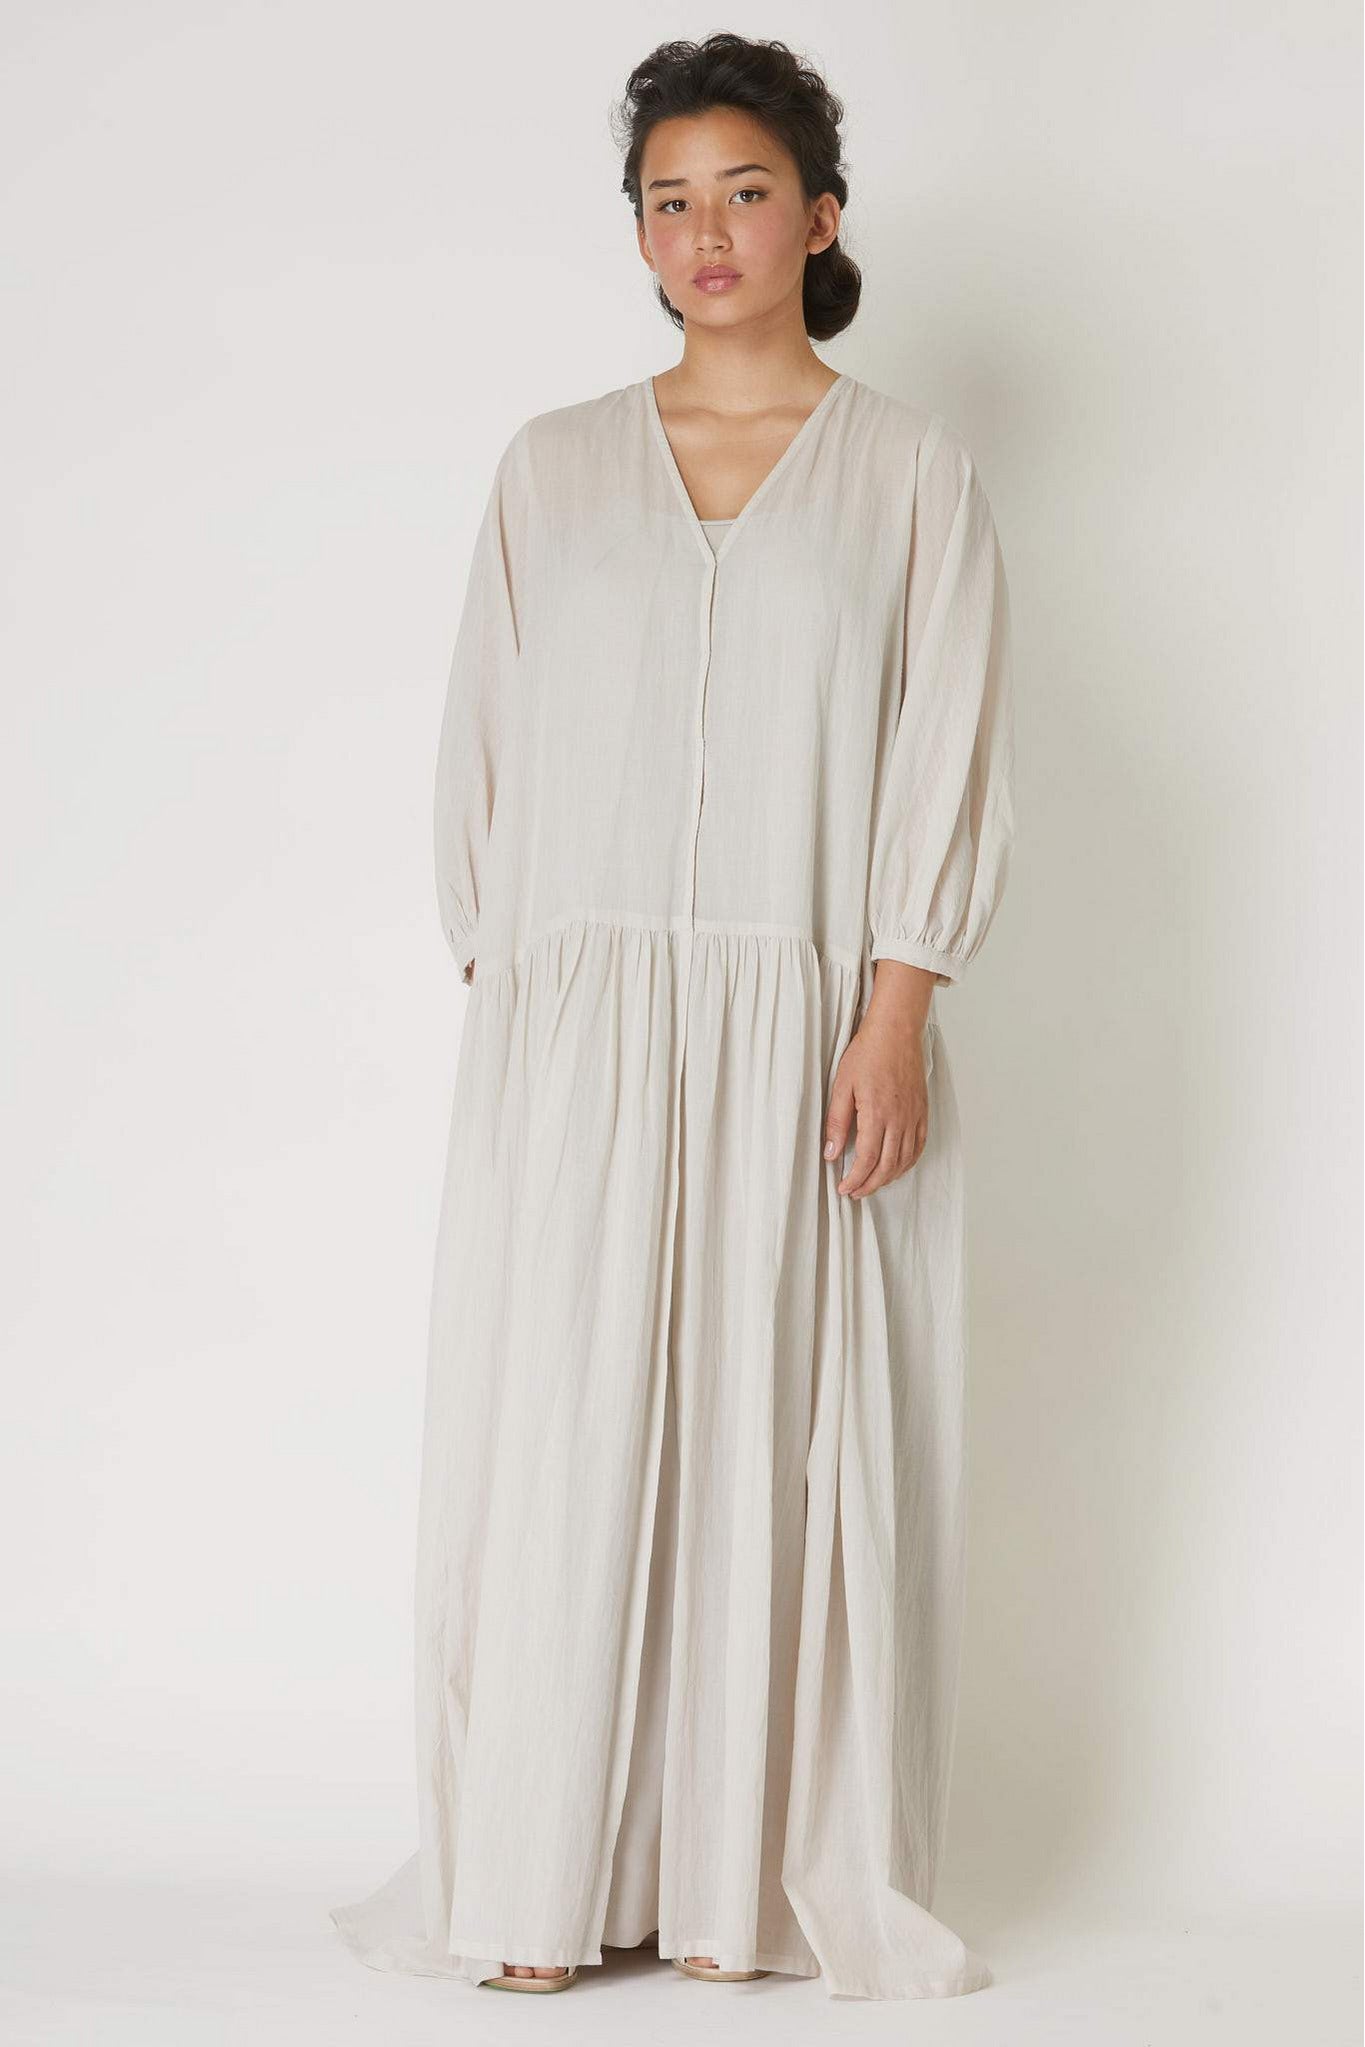 Teresa Dress in Cotton Chiffon Dresses CHRISTINE ALCALAY Sand XS/S 